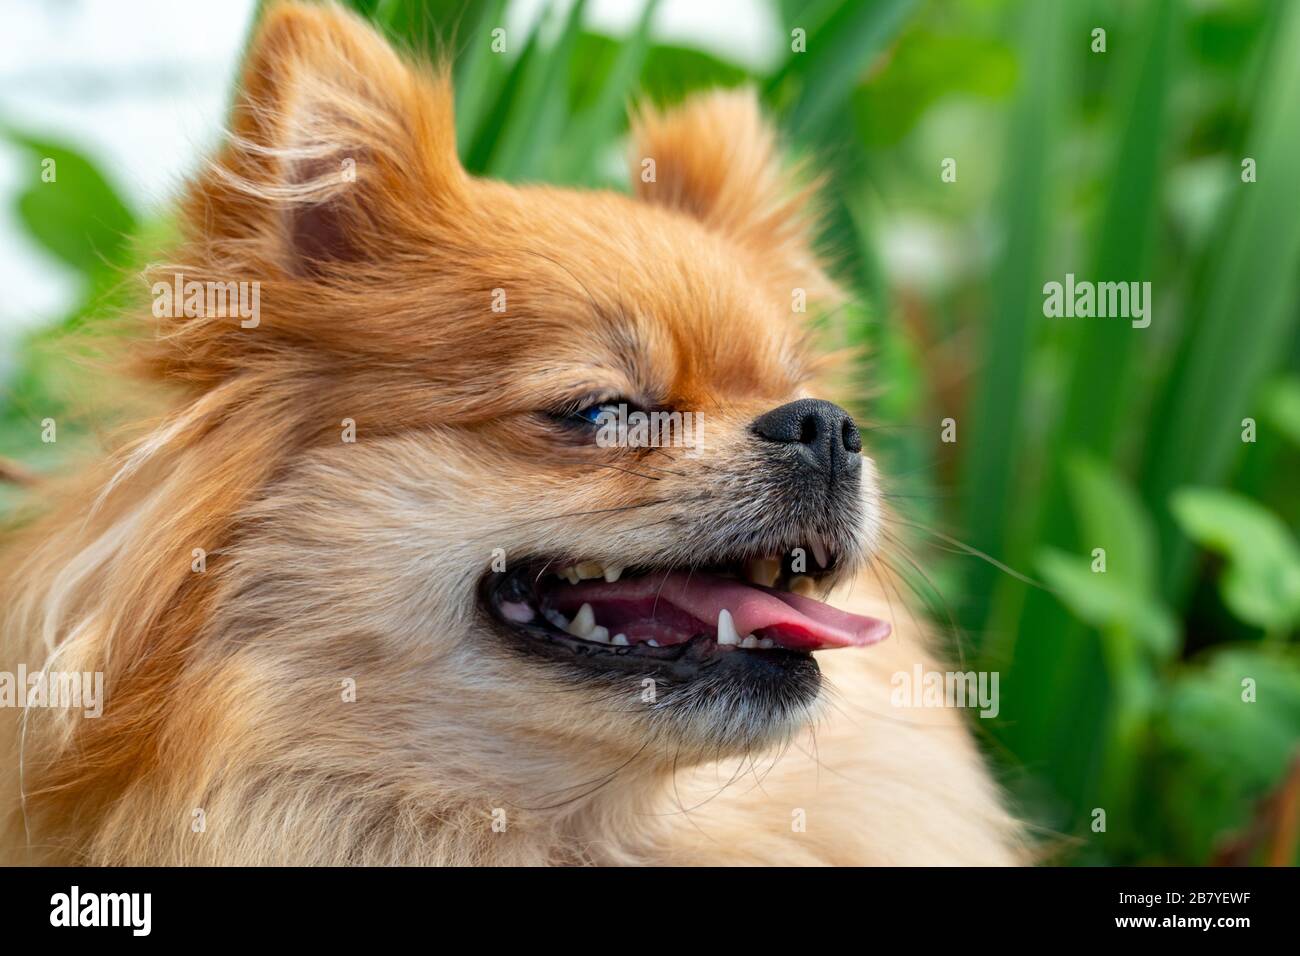 Smiling pomeranian dog close up portrait Stock Photo